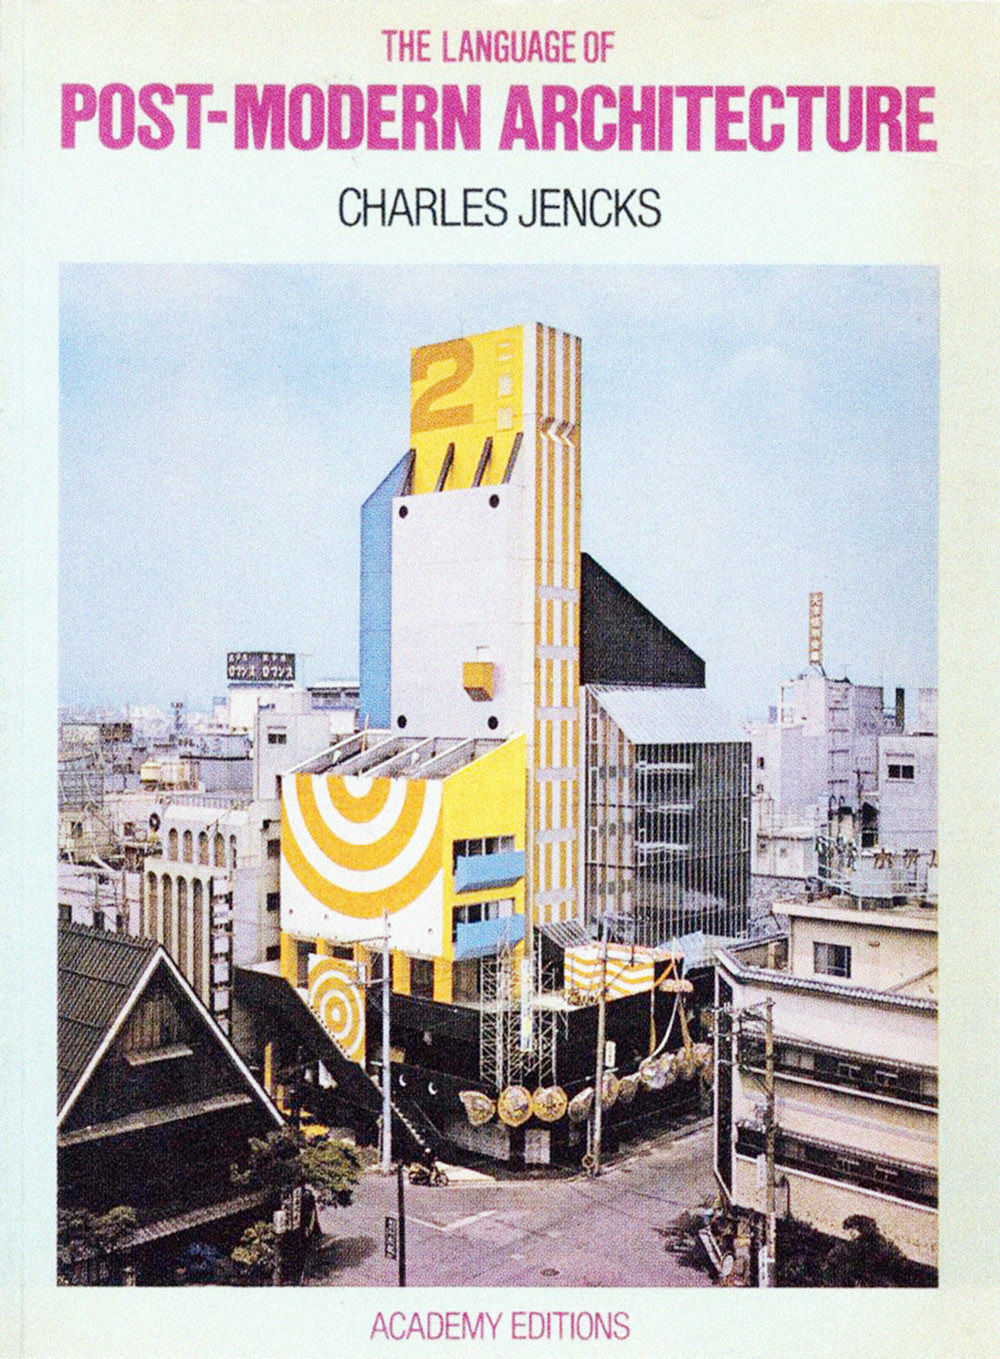 Обложка книги Чарльза Дженкса &laquo;Язык архитектуры постмодернизма&raquo;, 1977